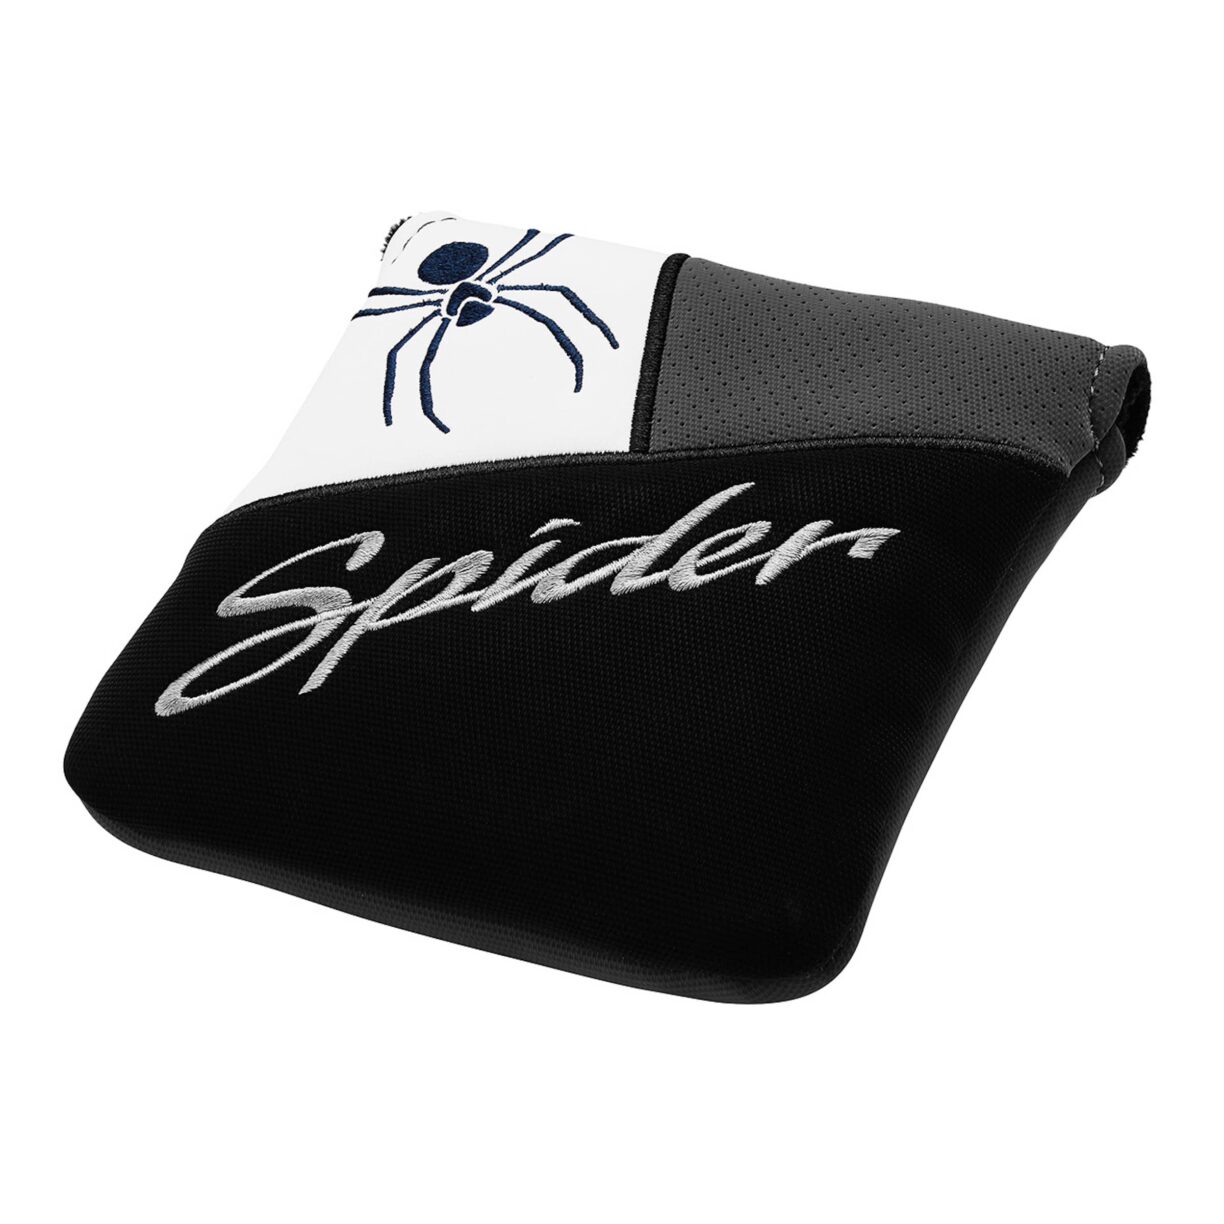 Taylormade spider putter 36